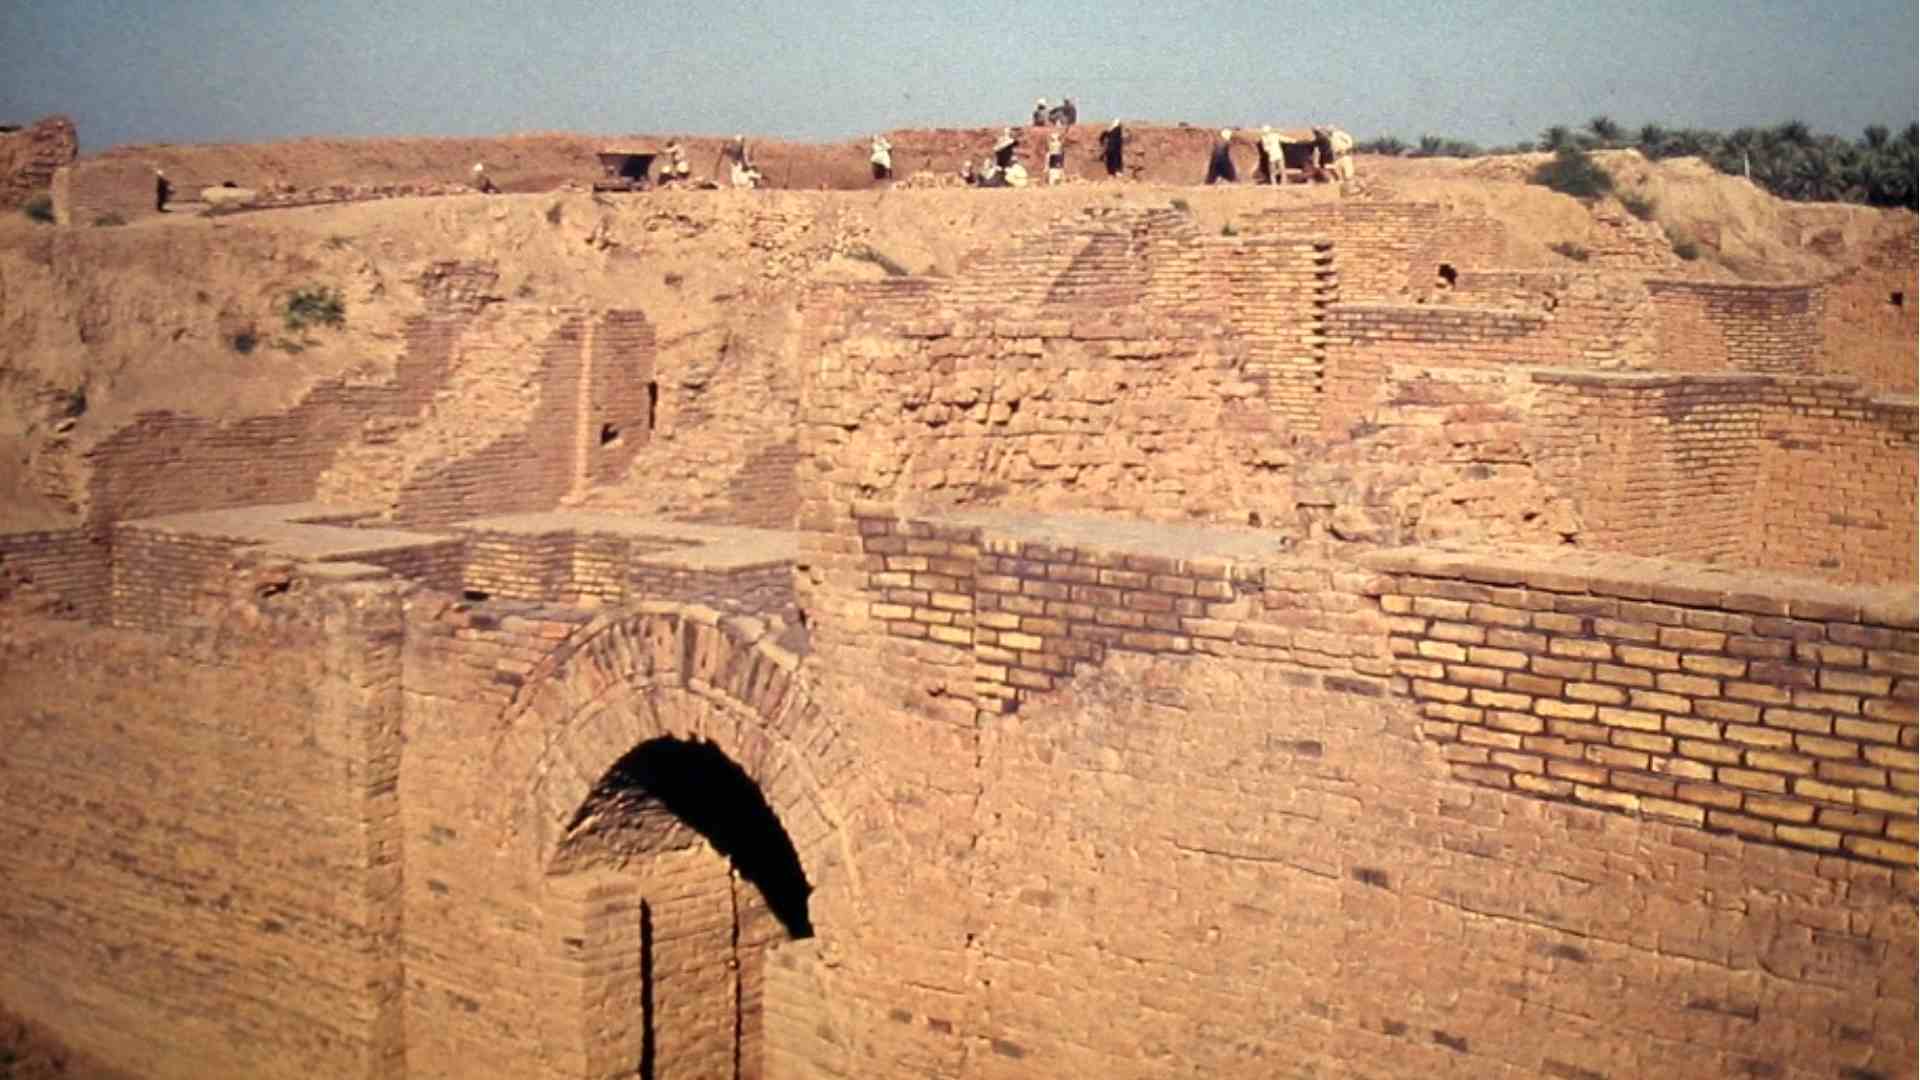 Vestige de la muraille de Babylone - Irak - Domaine public